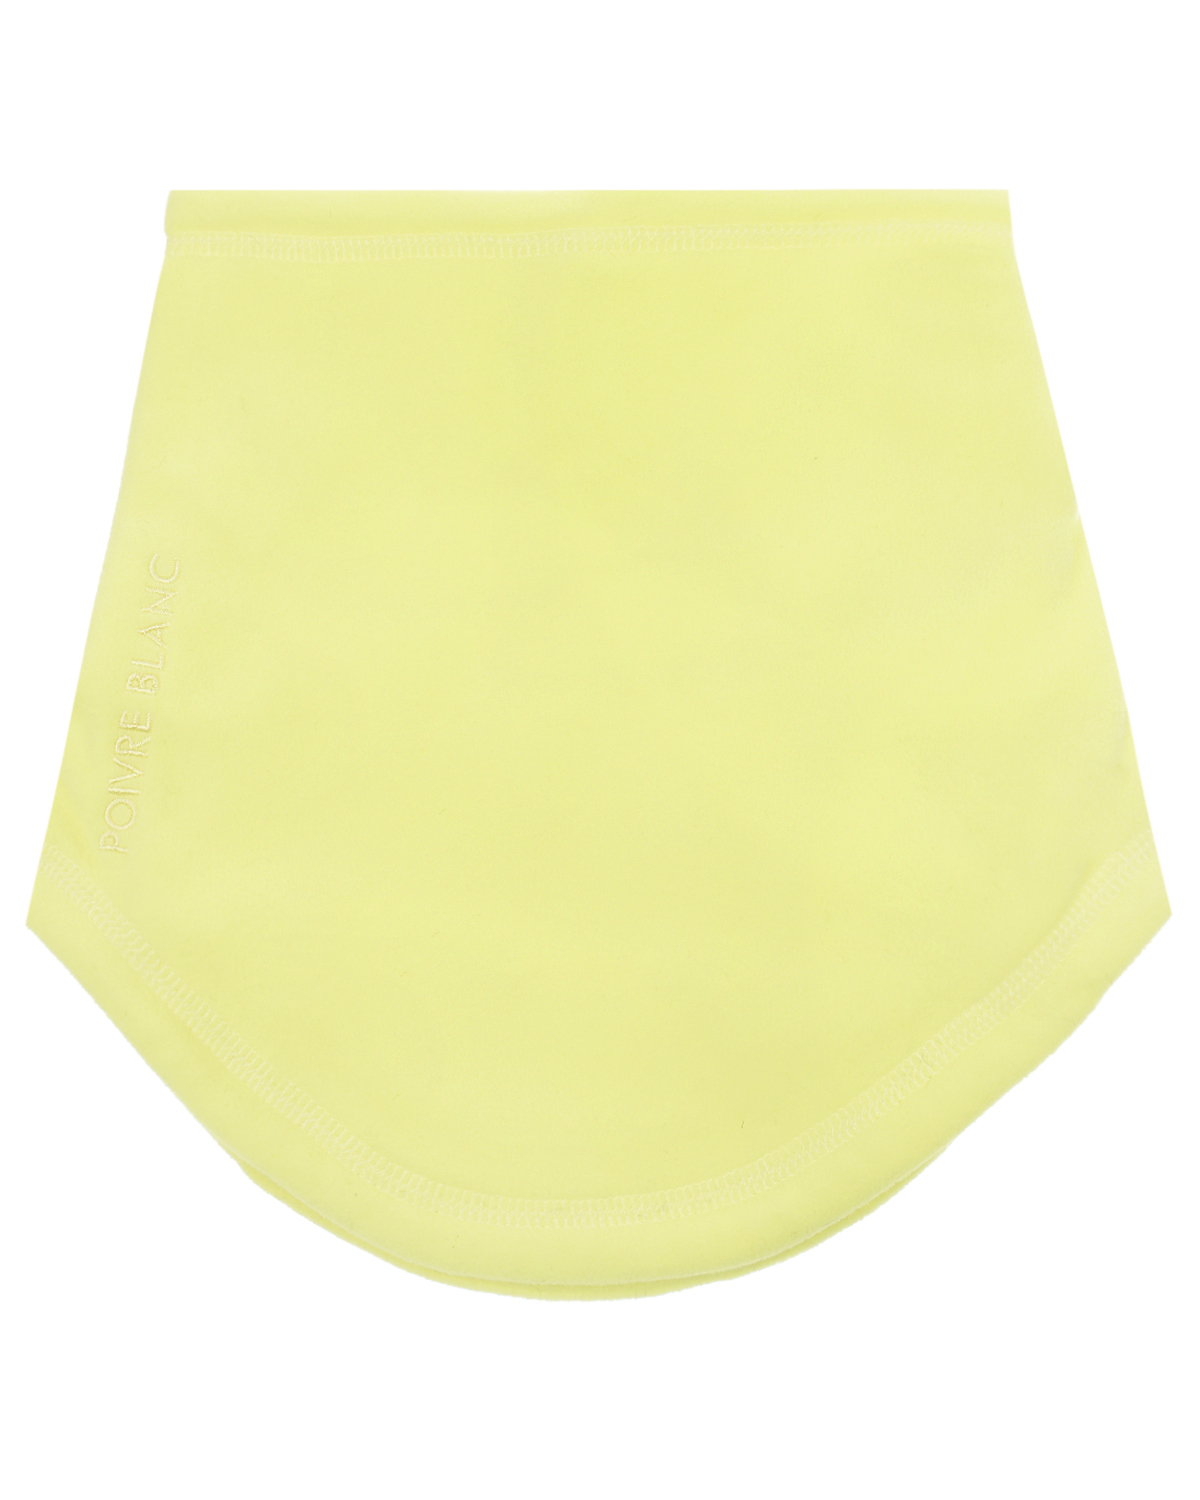 Желтый шарф из флиса Poivre Blanc детский, размер unica